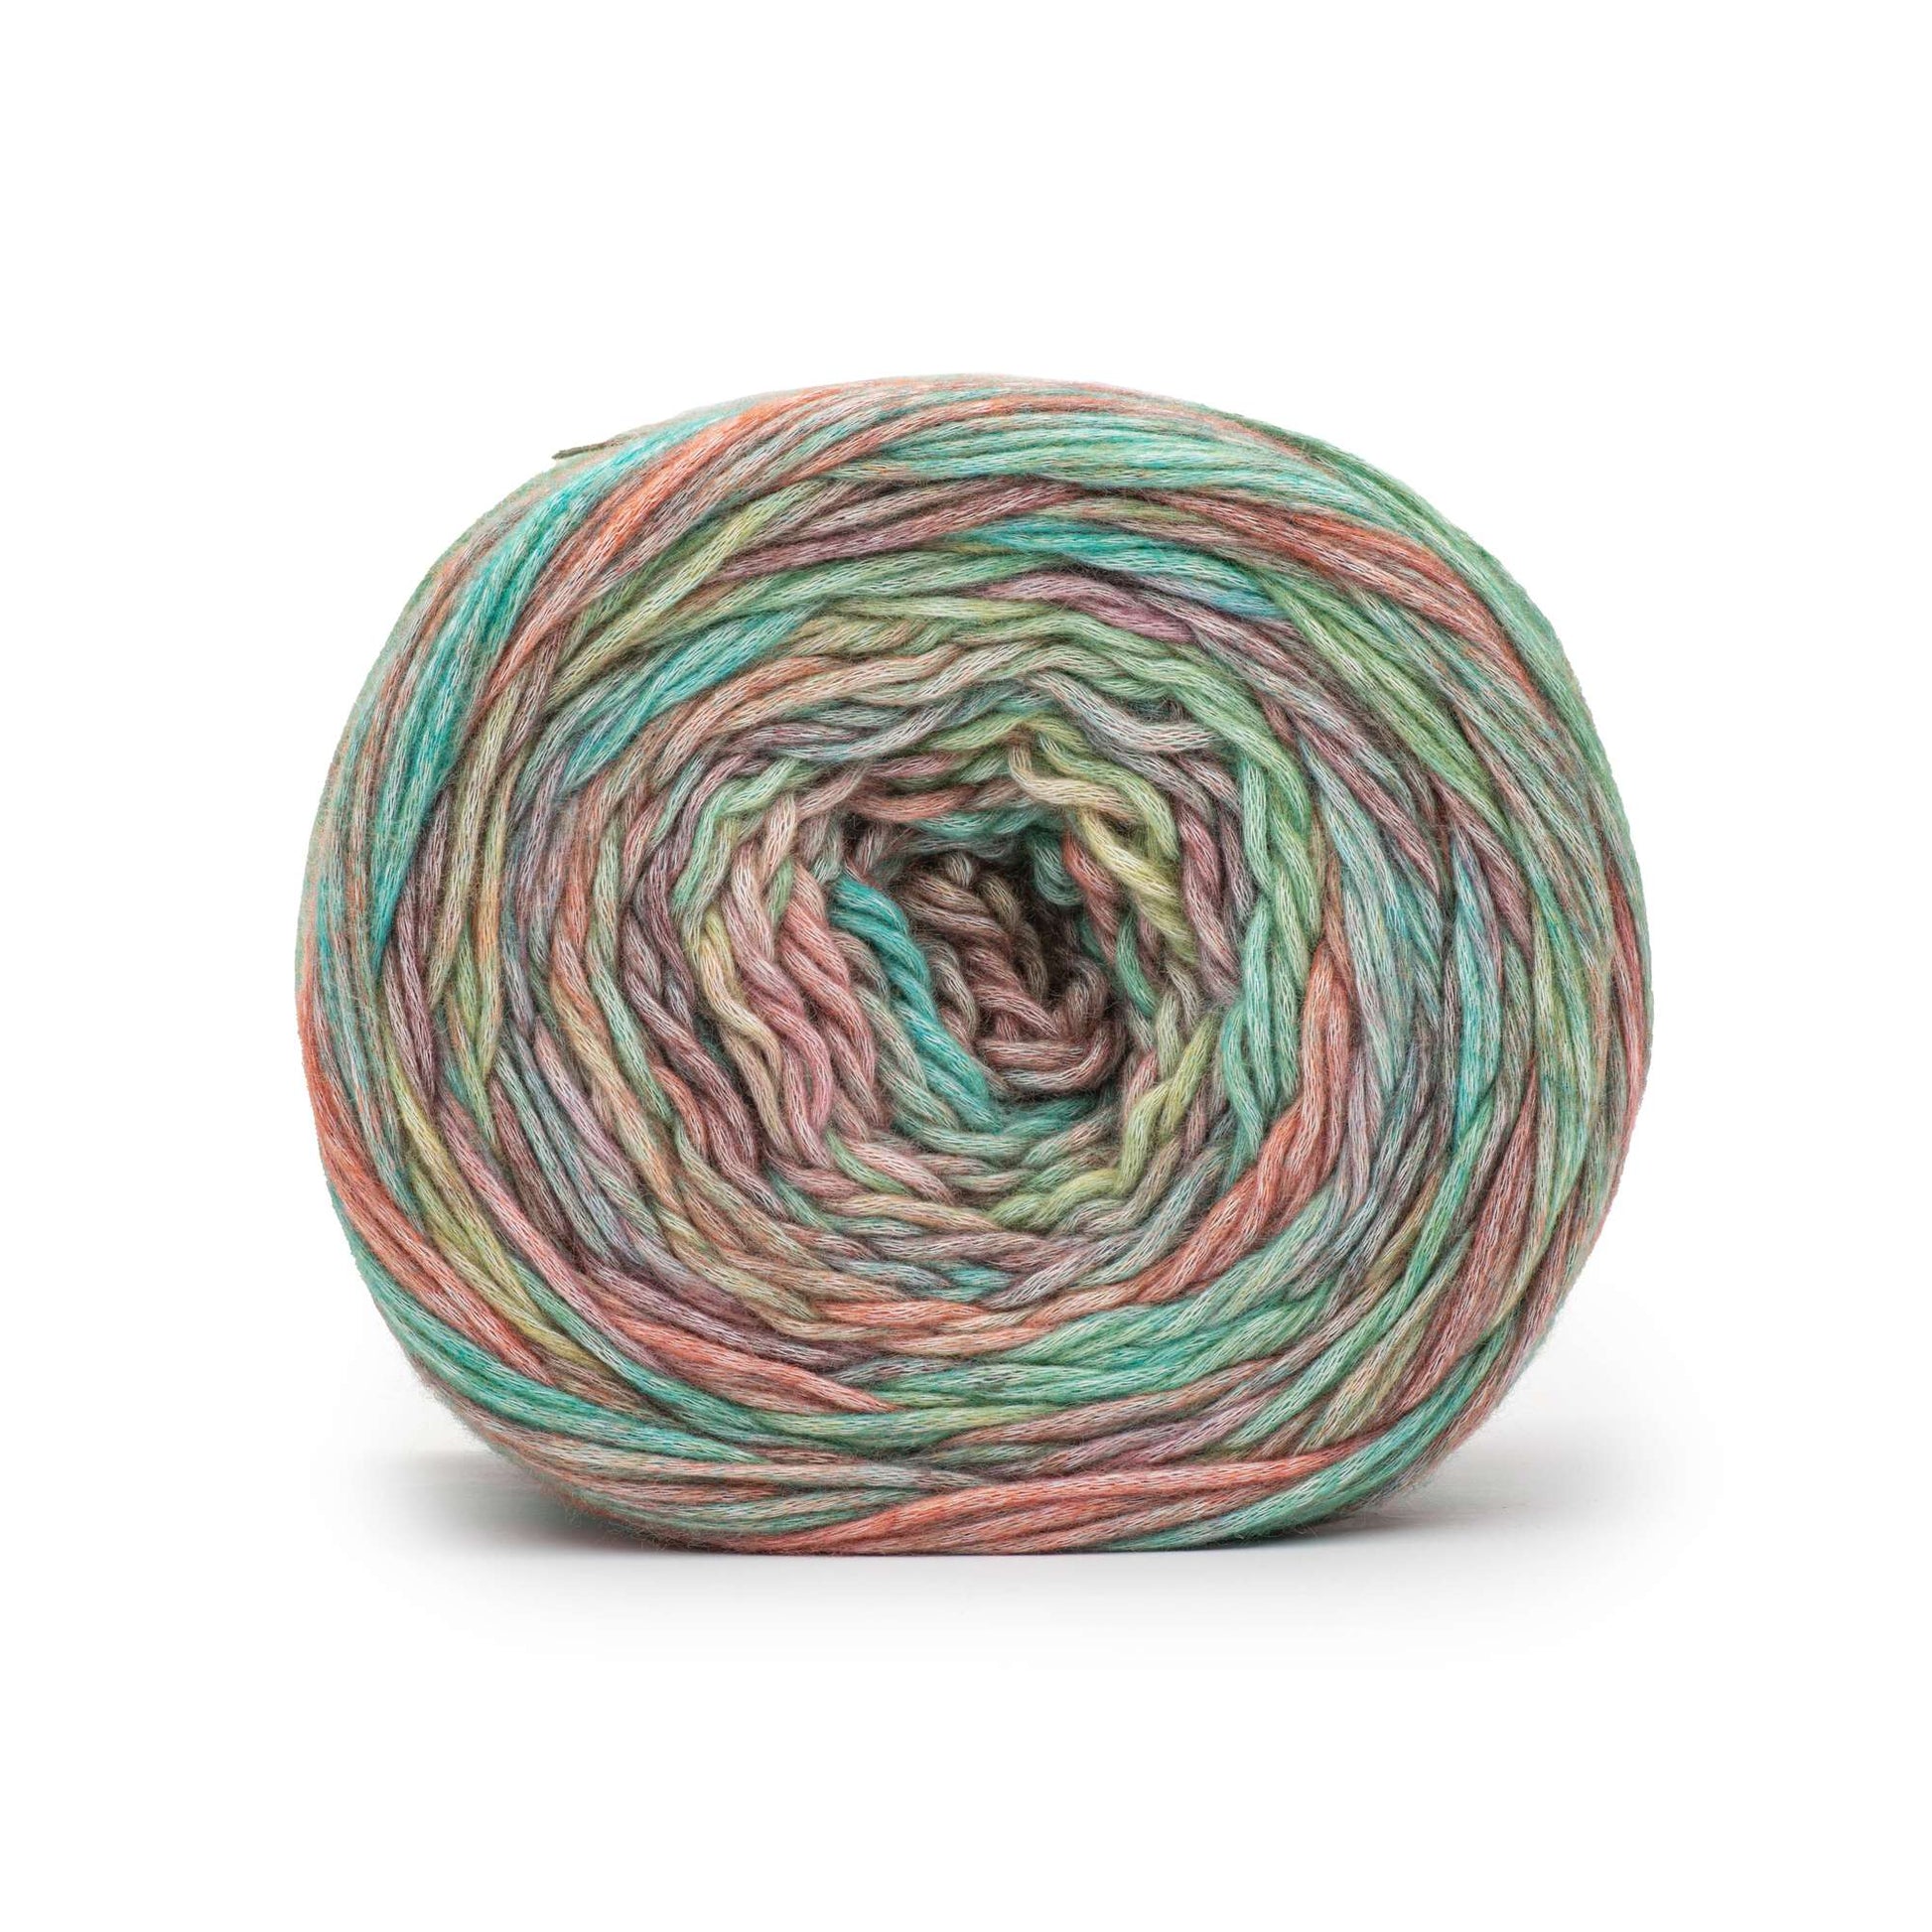 Caron Blossom Cakes Crochet Yarn in Macaw | Size: 454g/16oz | Pattern: Crochet | by Yarnspirations